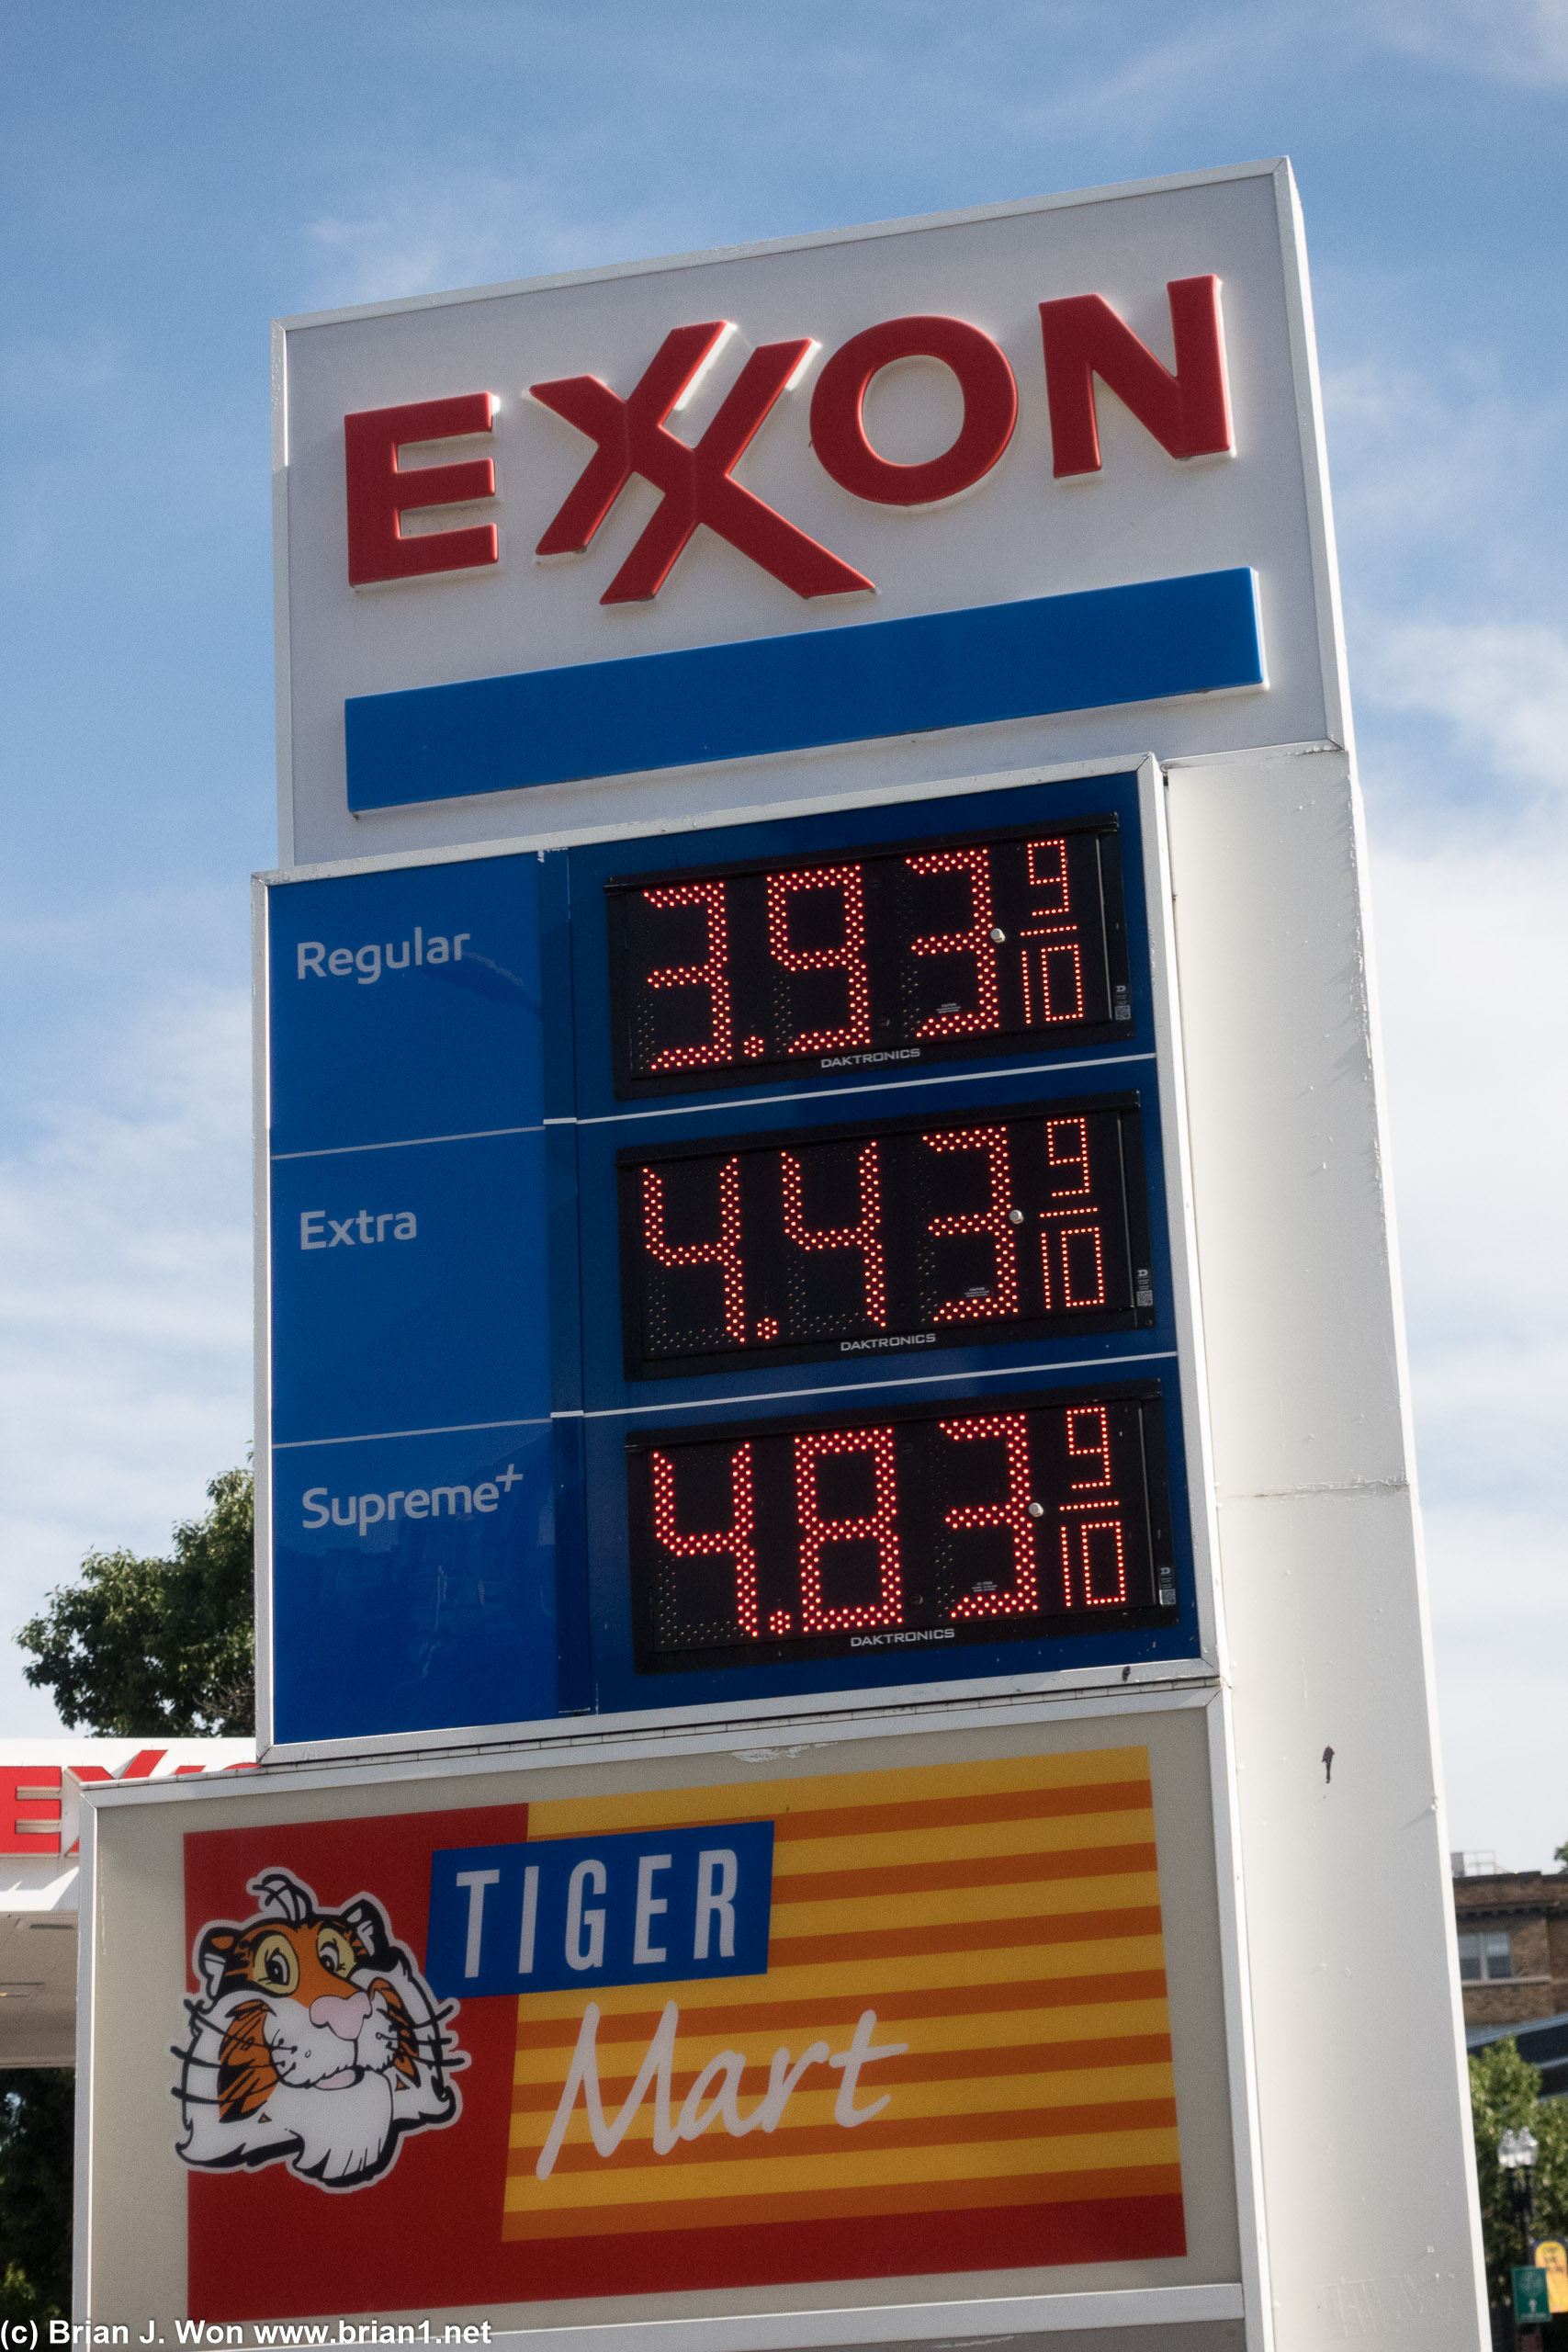 Gas is definitely cheaper here.